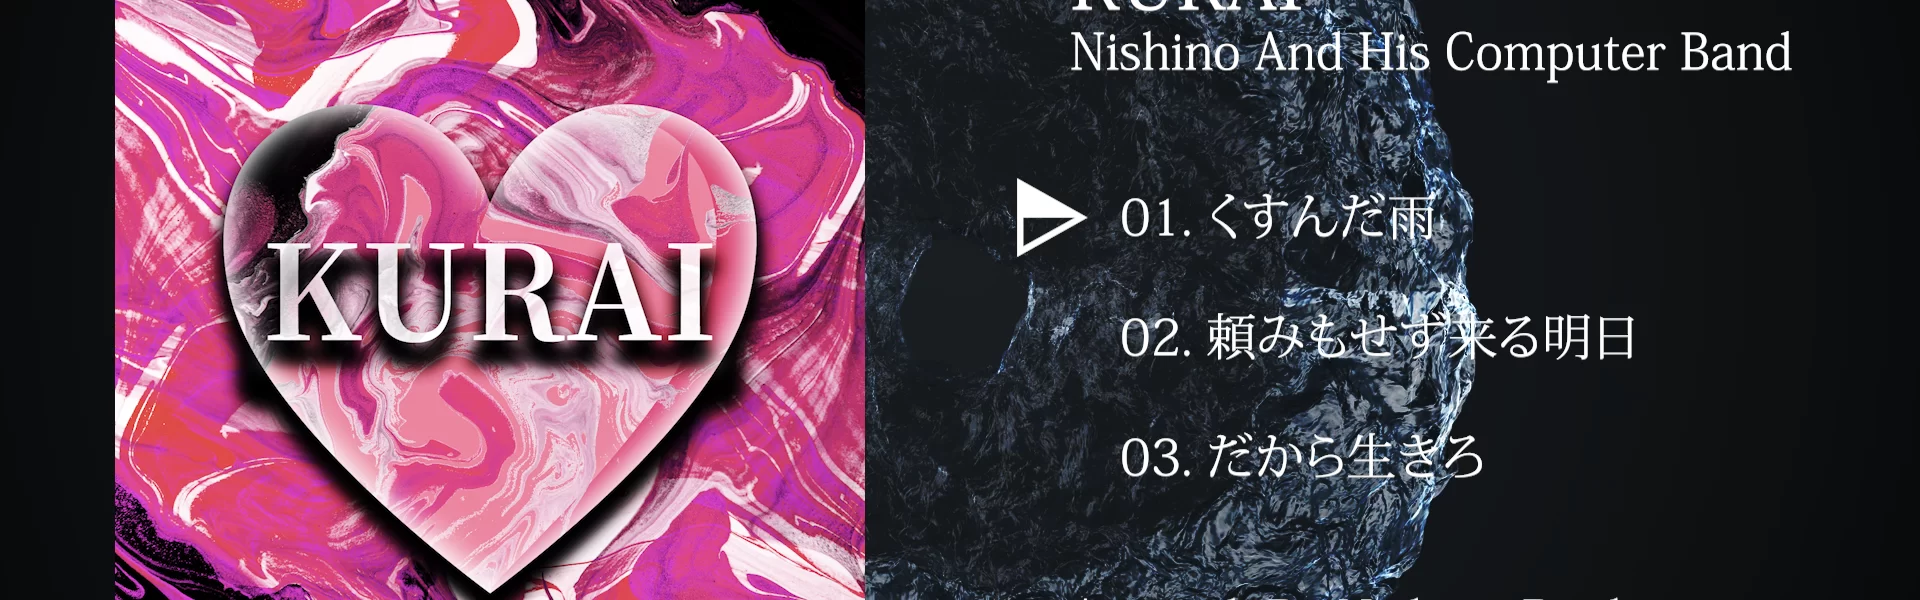 Nishino And His Computer BandのVOCALOIDアルバム「KURAI」のサムネイル画像